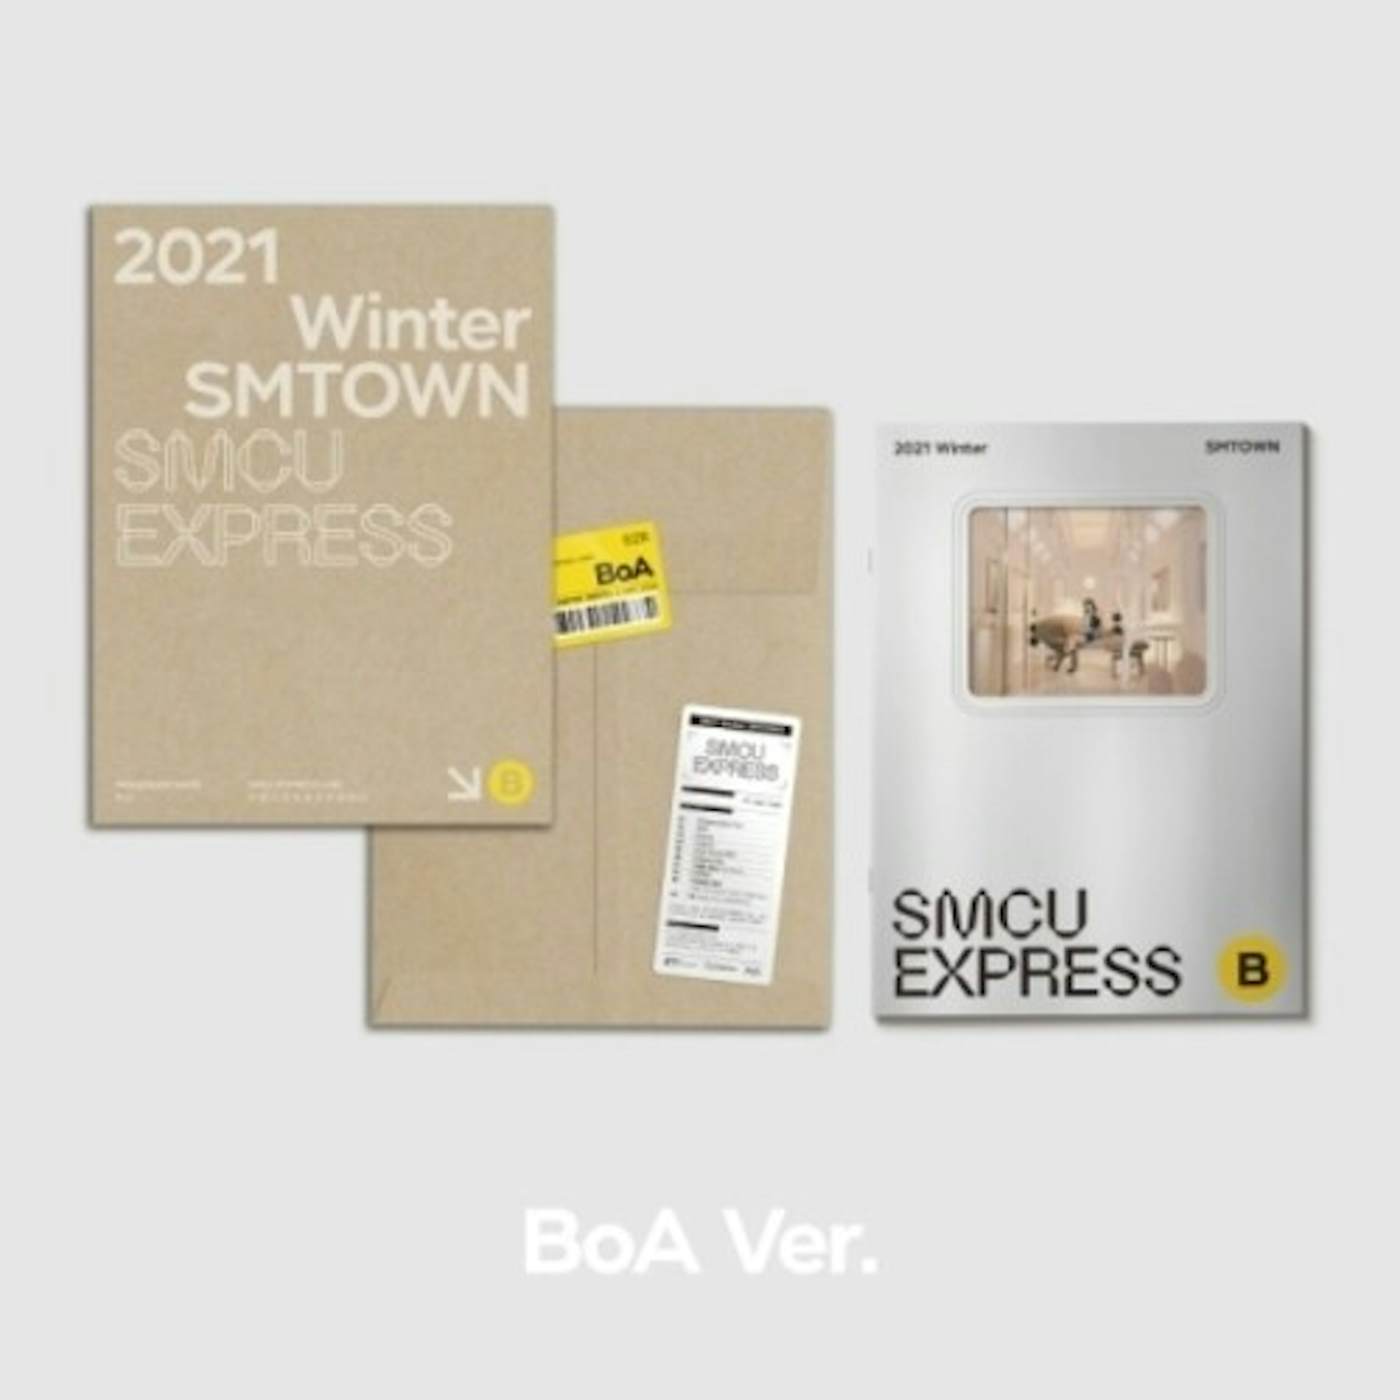 2021 WINTER SMTOWN: SMCU EXPRESS (BOA) CD